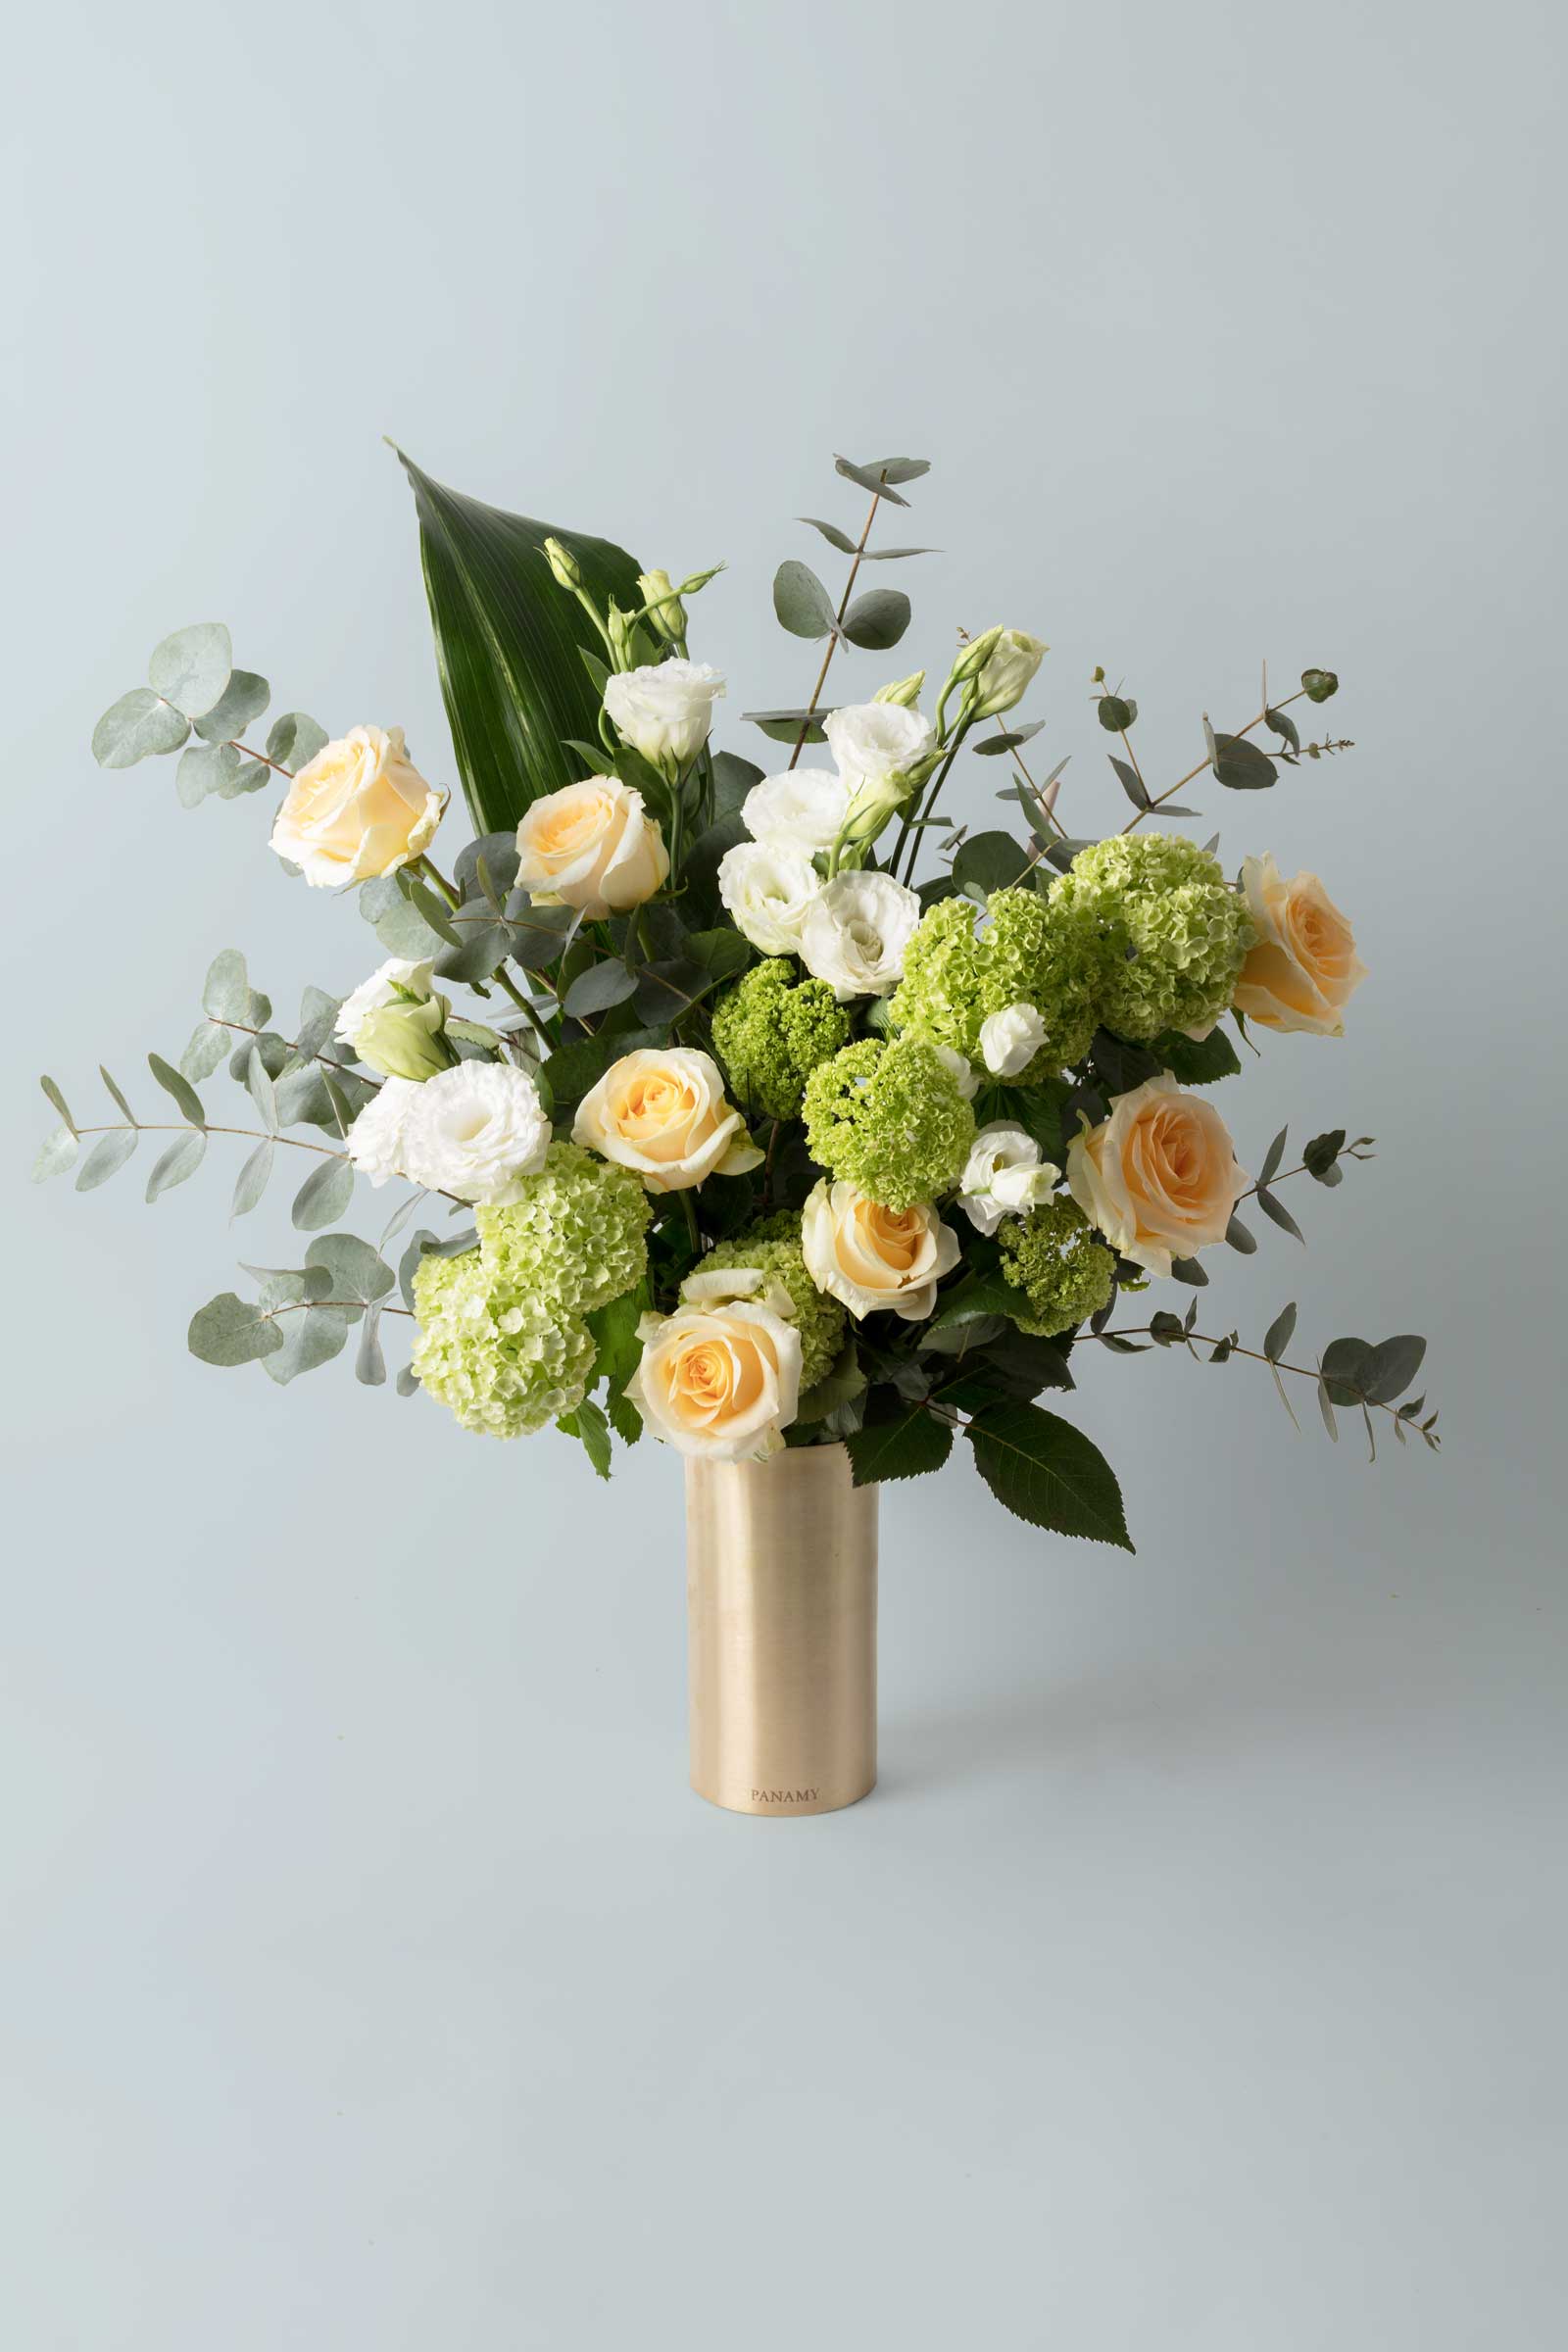 L'Orelio - with Vase - Bouquet - Flowerbag Collection - PANAMY Flowers Switzerland